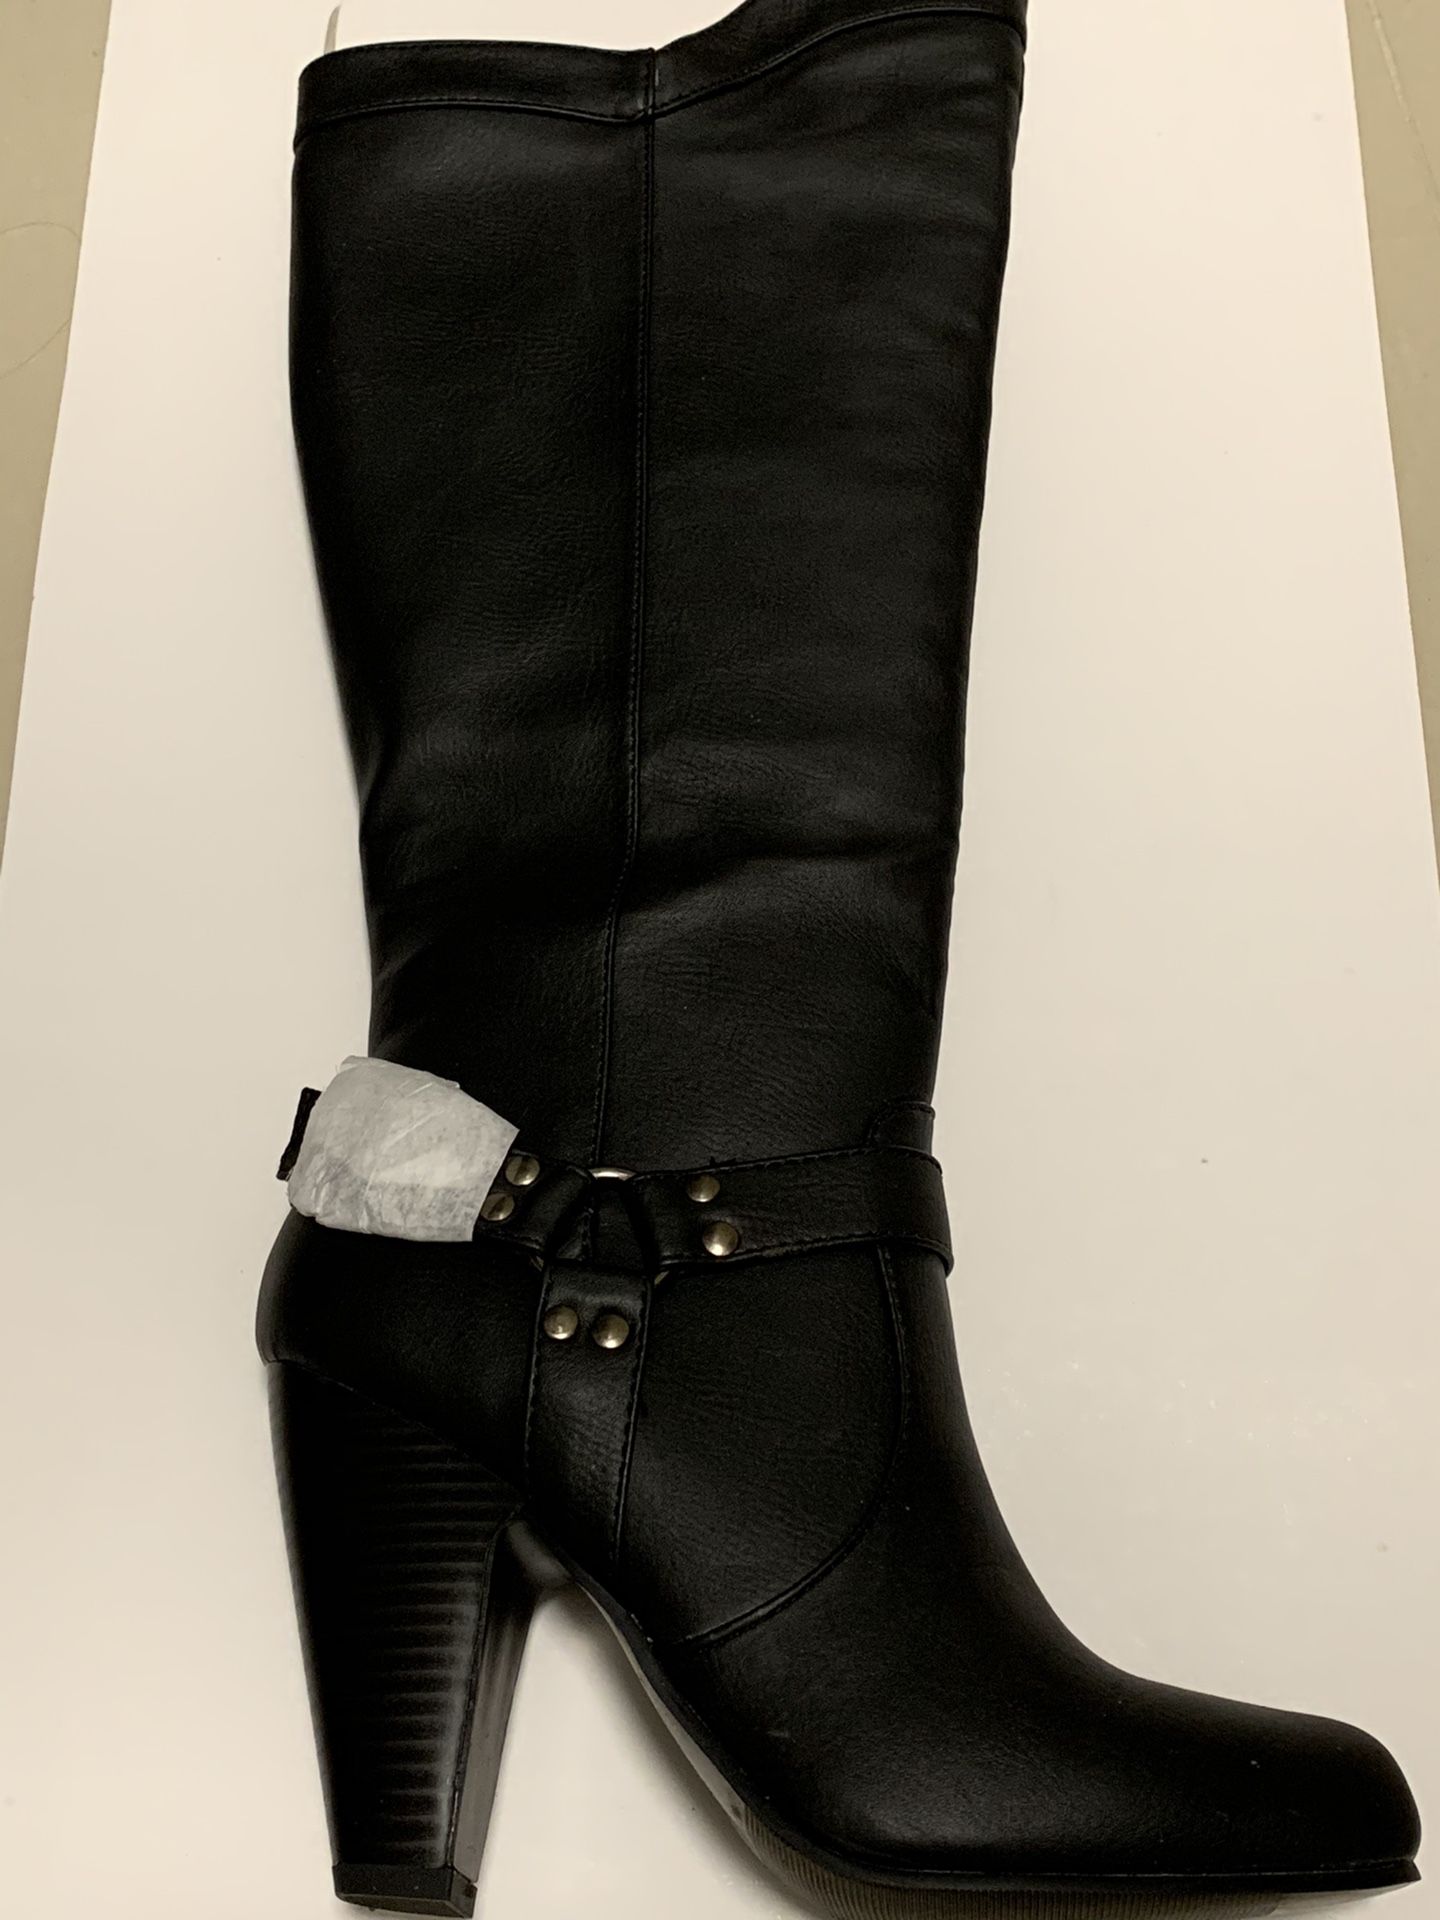 Brand New Black Boots